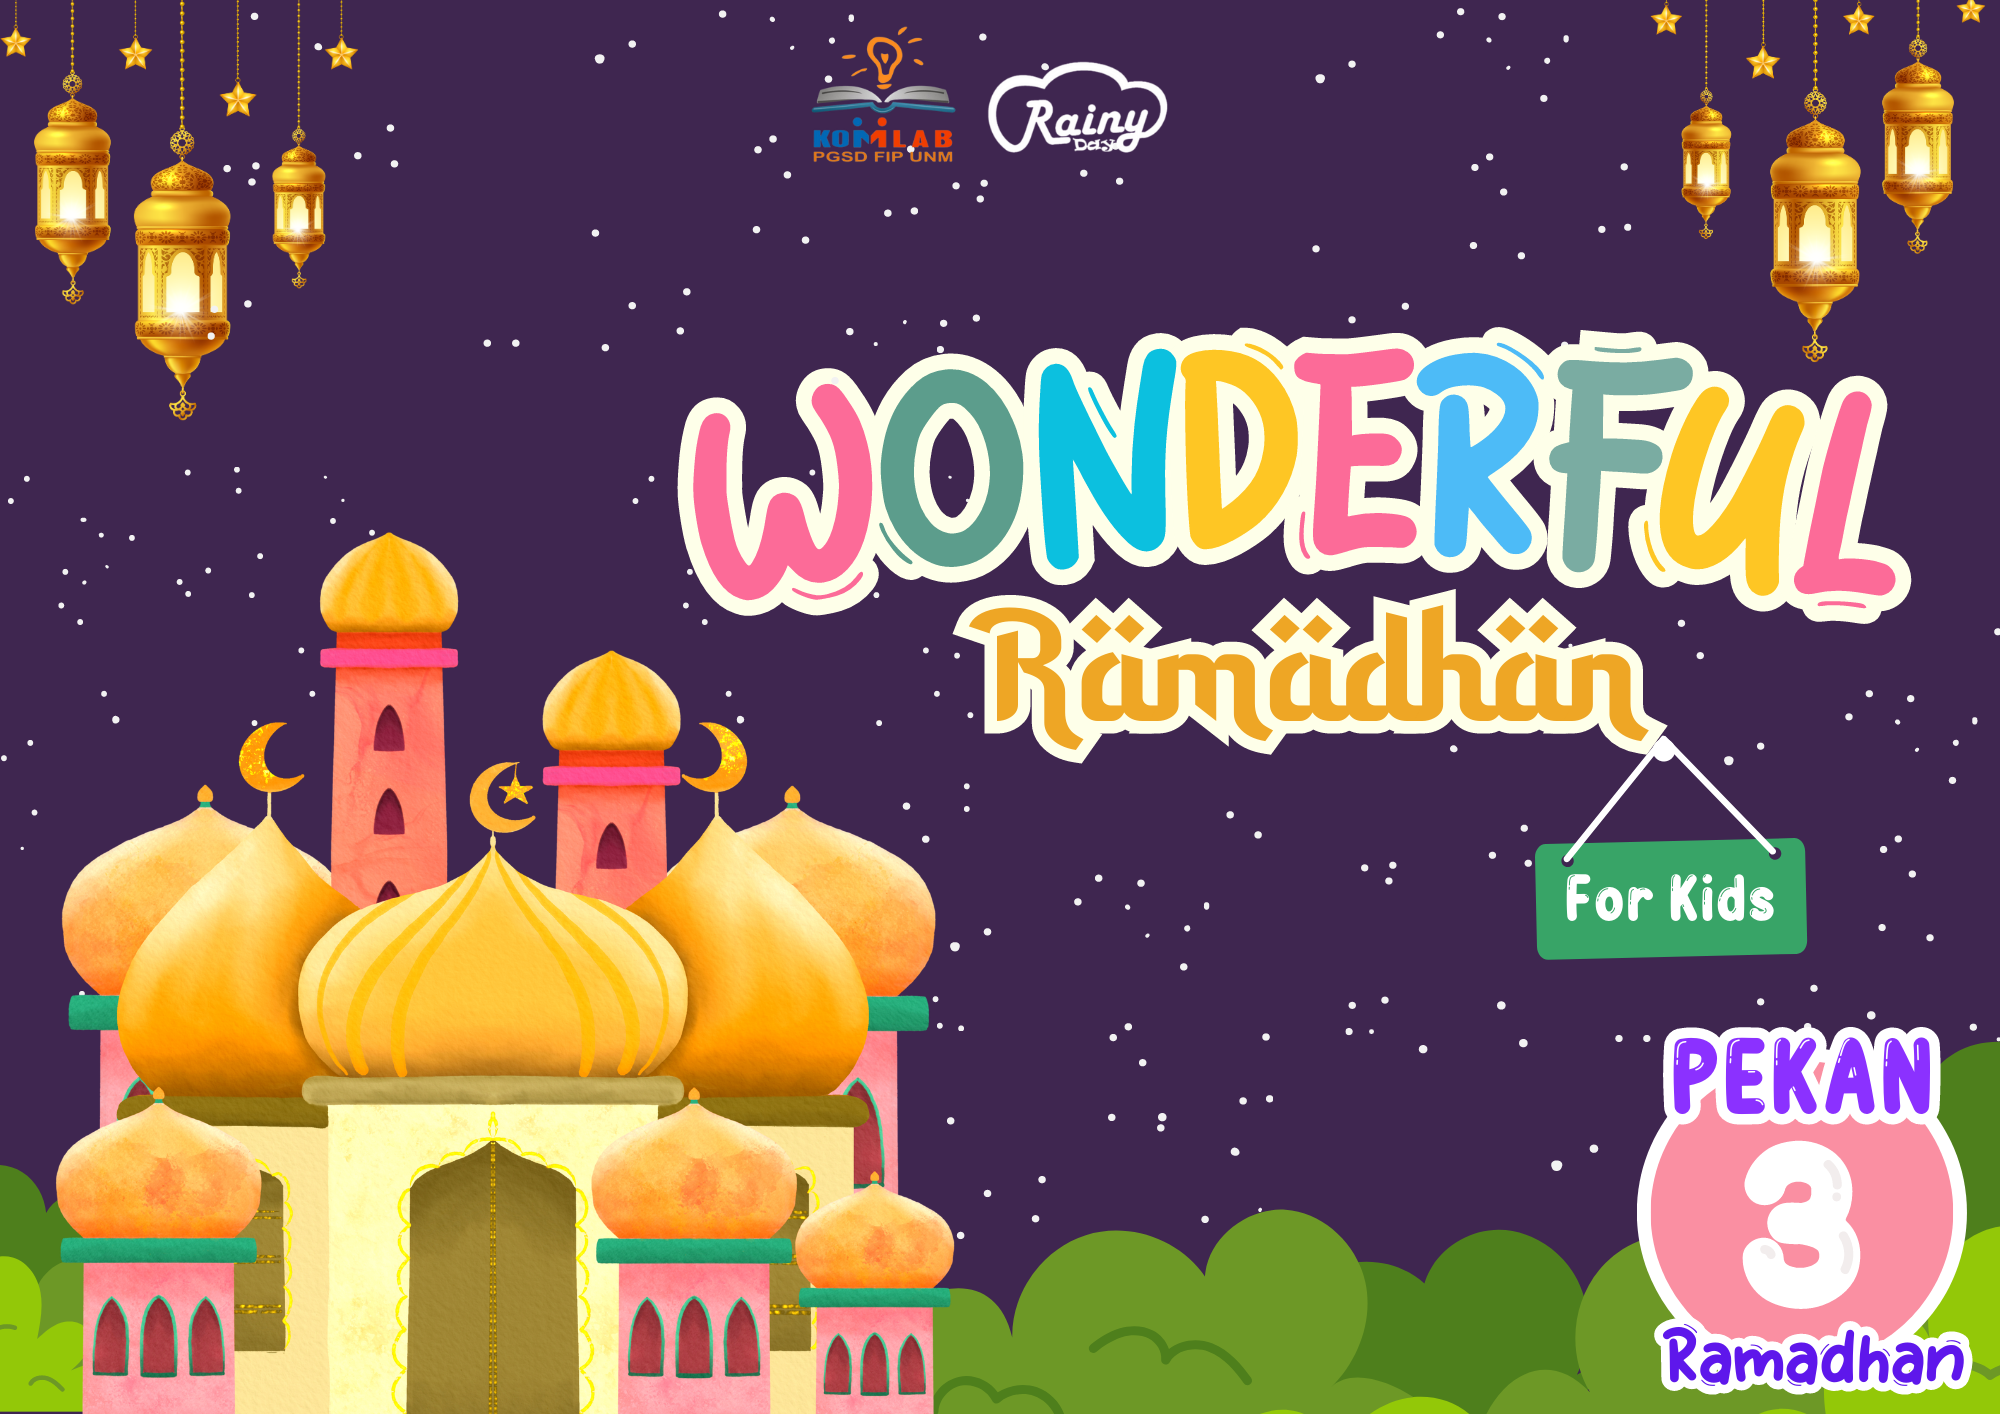 Wonderful Ramadan 3